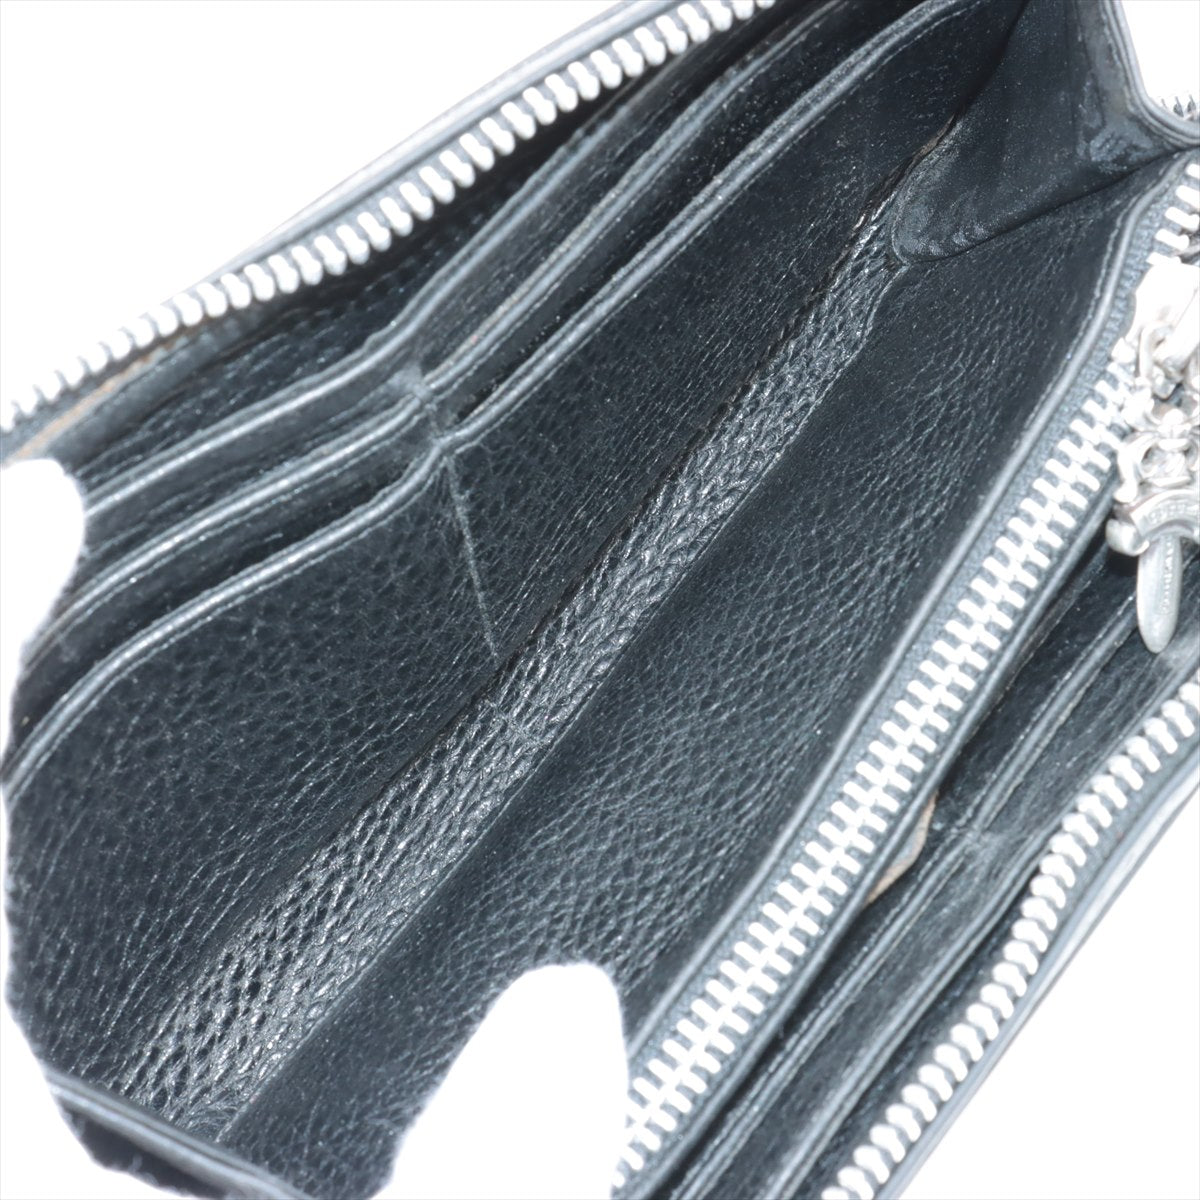 Chrome Hearts REC F ZIP Wallet Leather & 925 Black Dagger zip